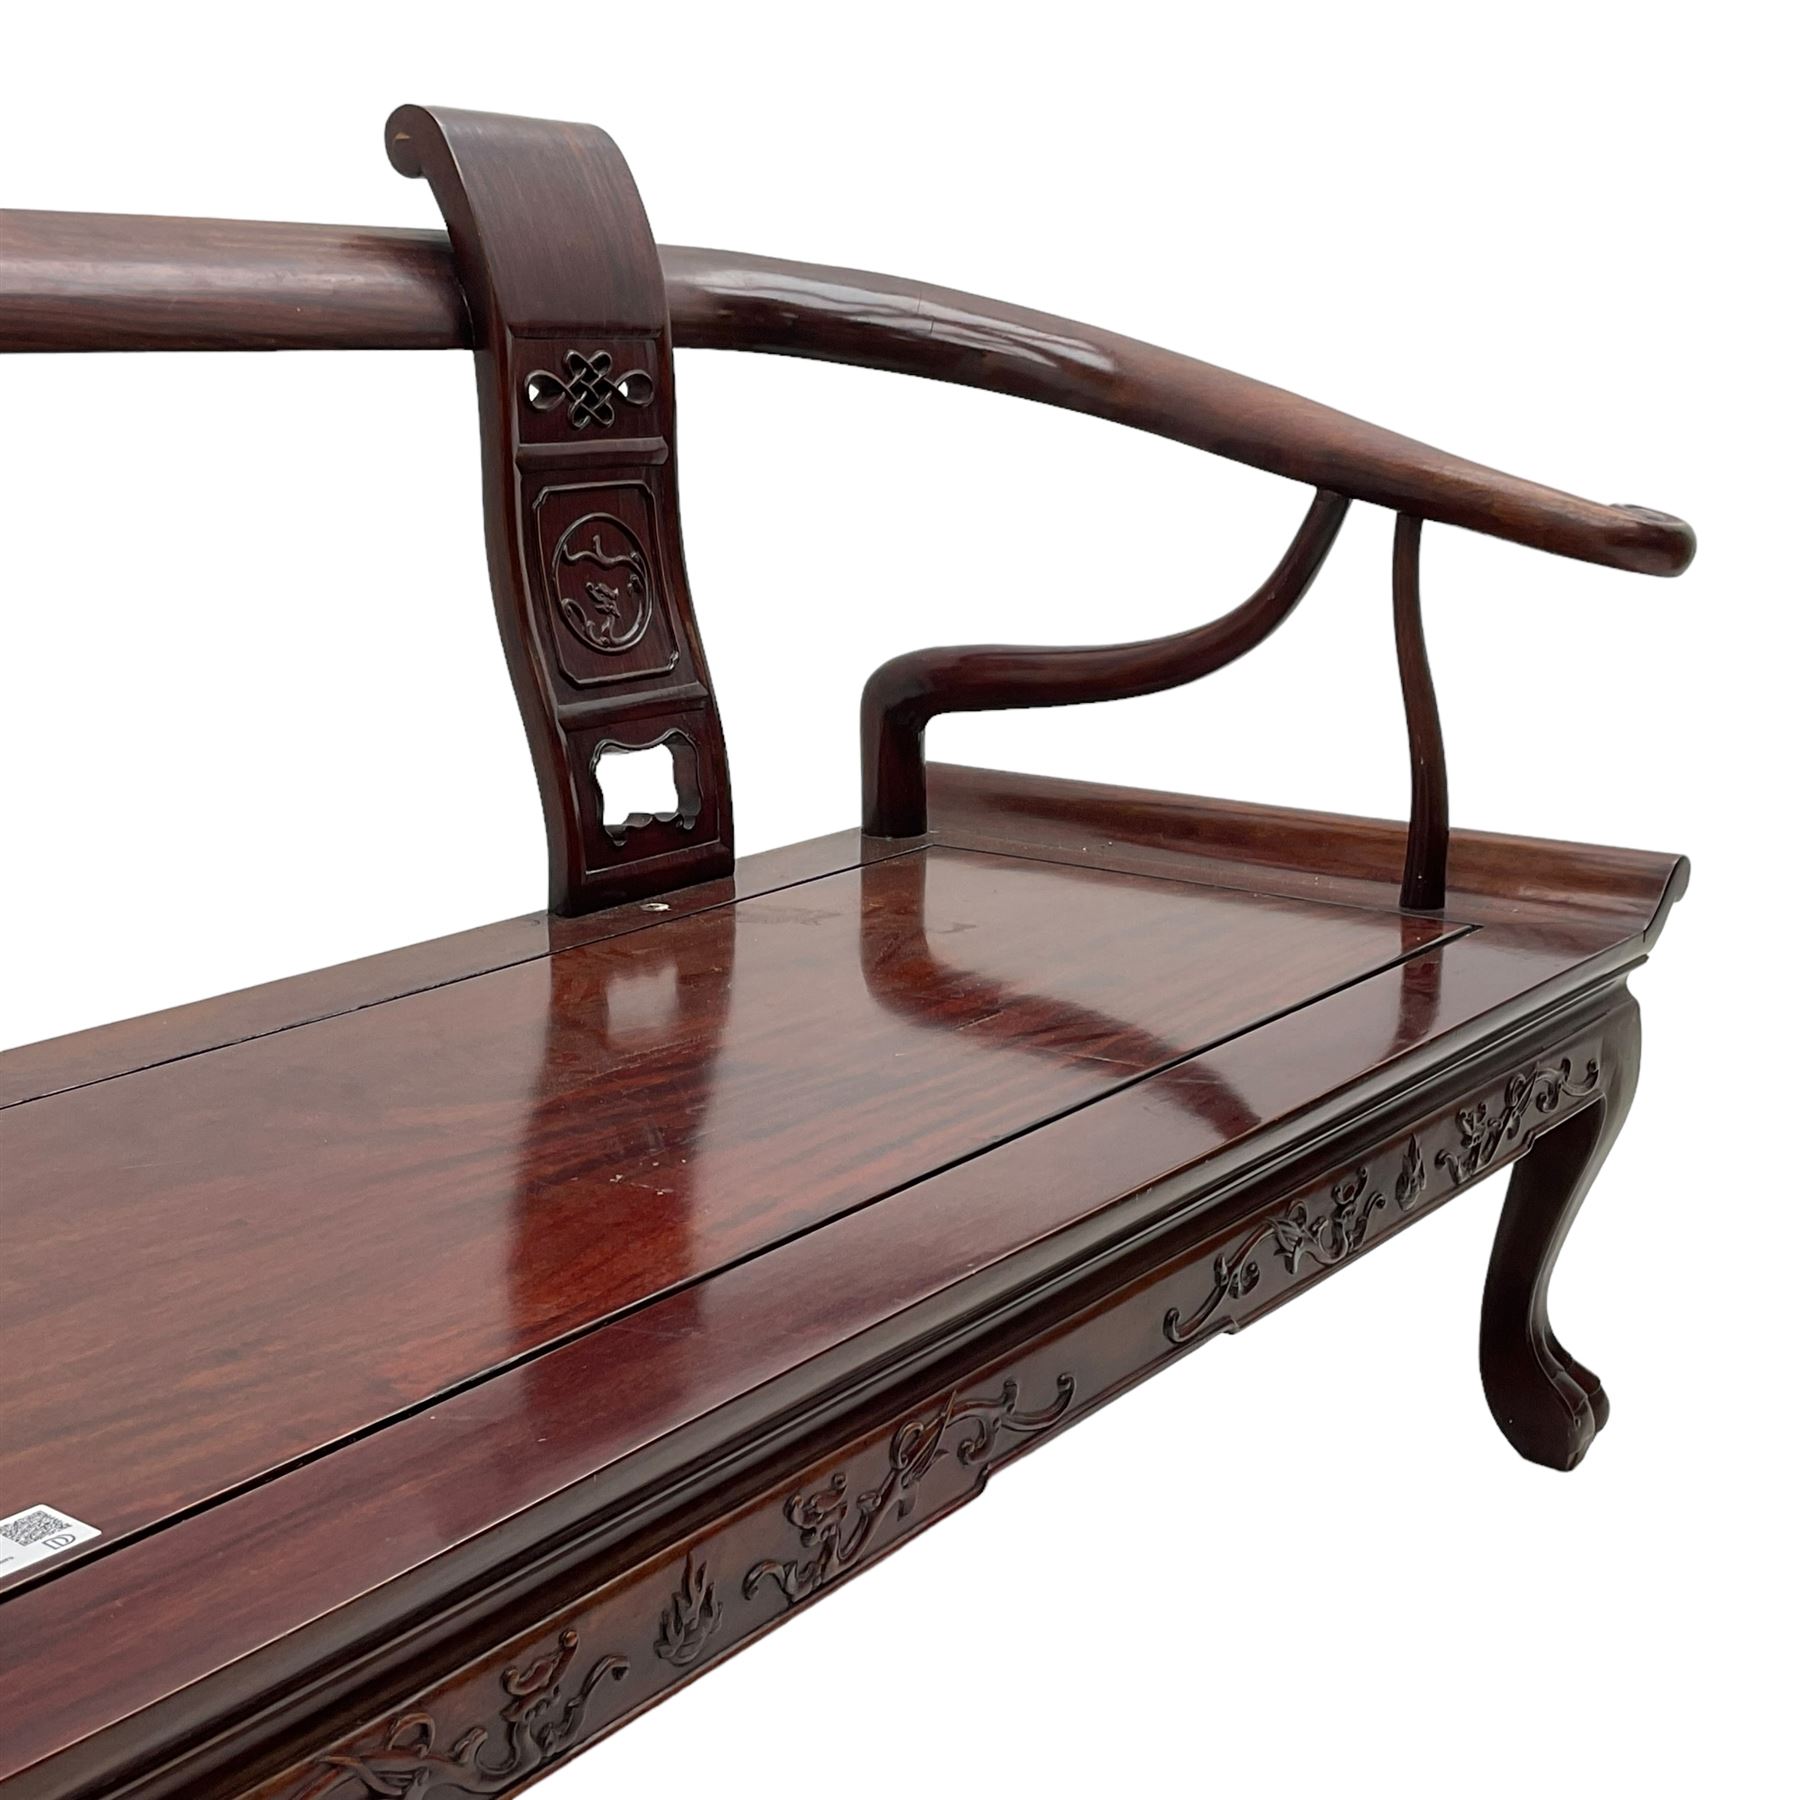 20th century Chinese hardwood two-seat bench - Image 5 of 6